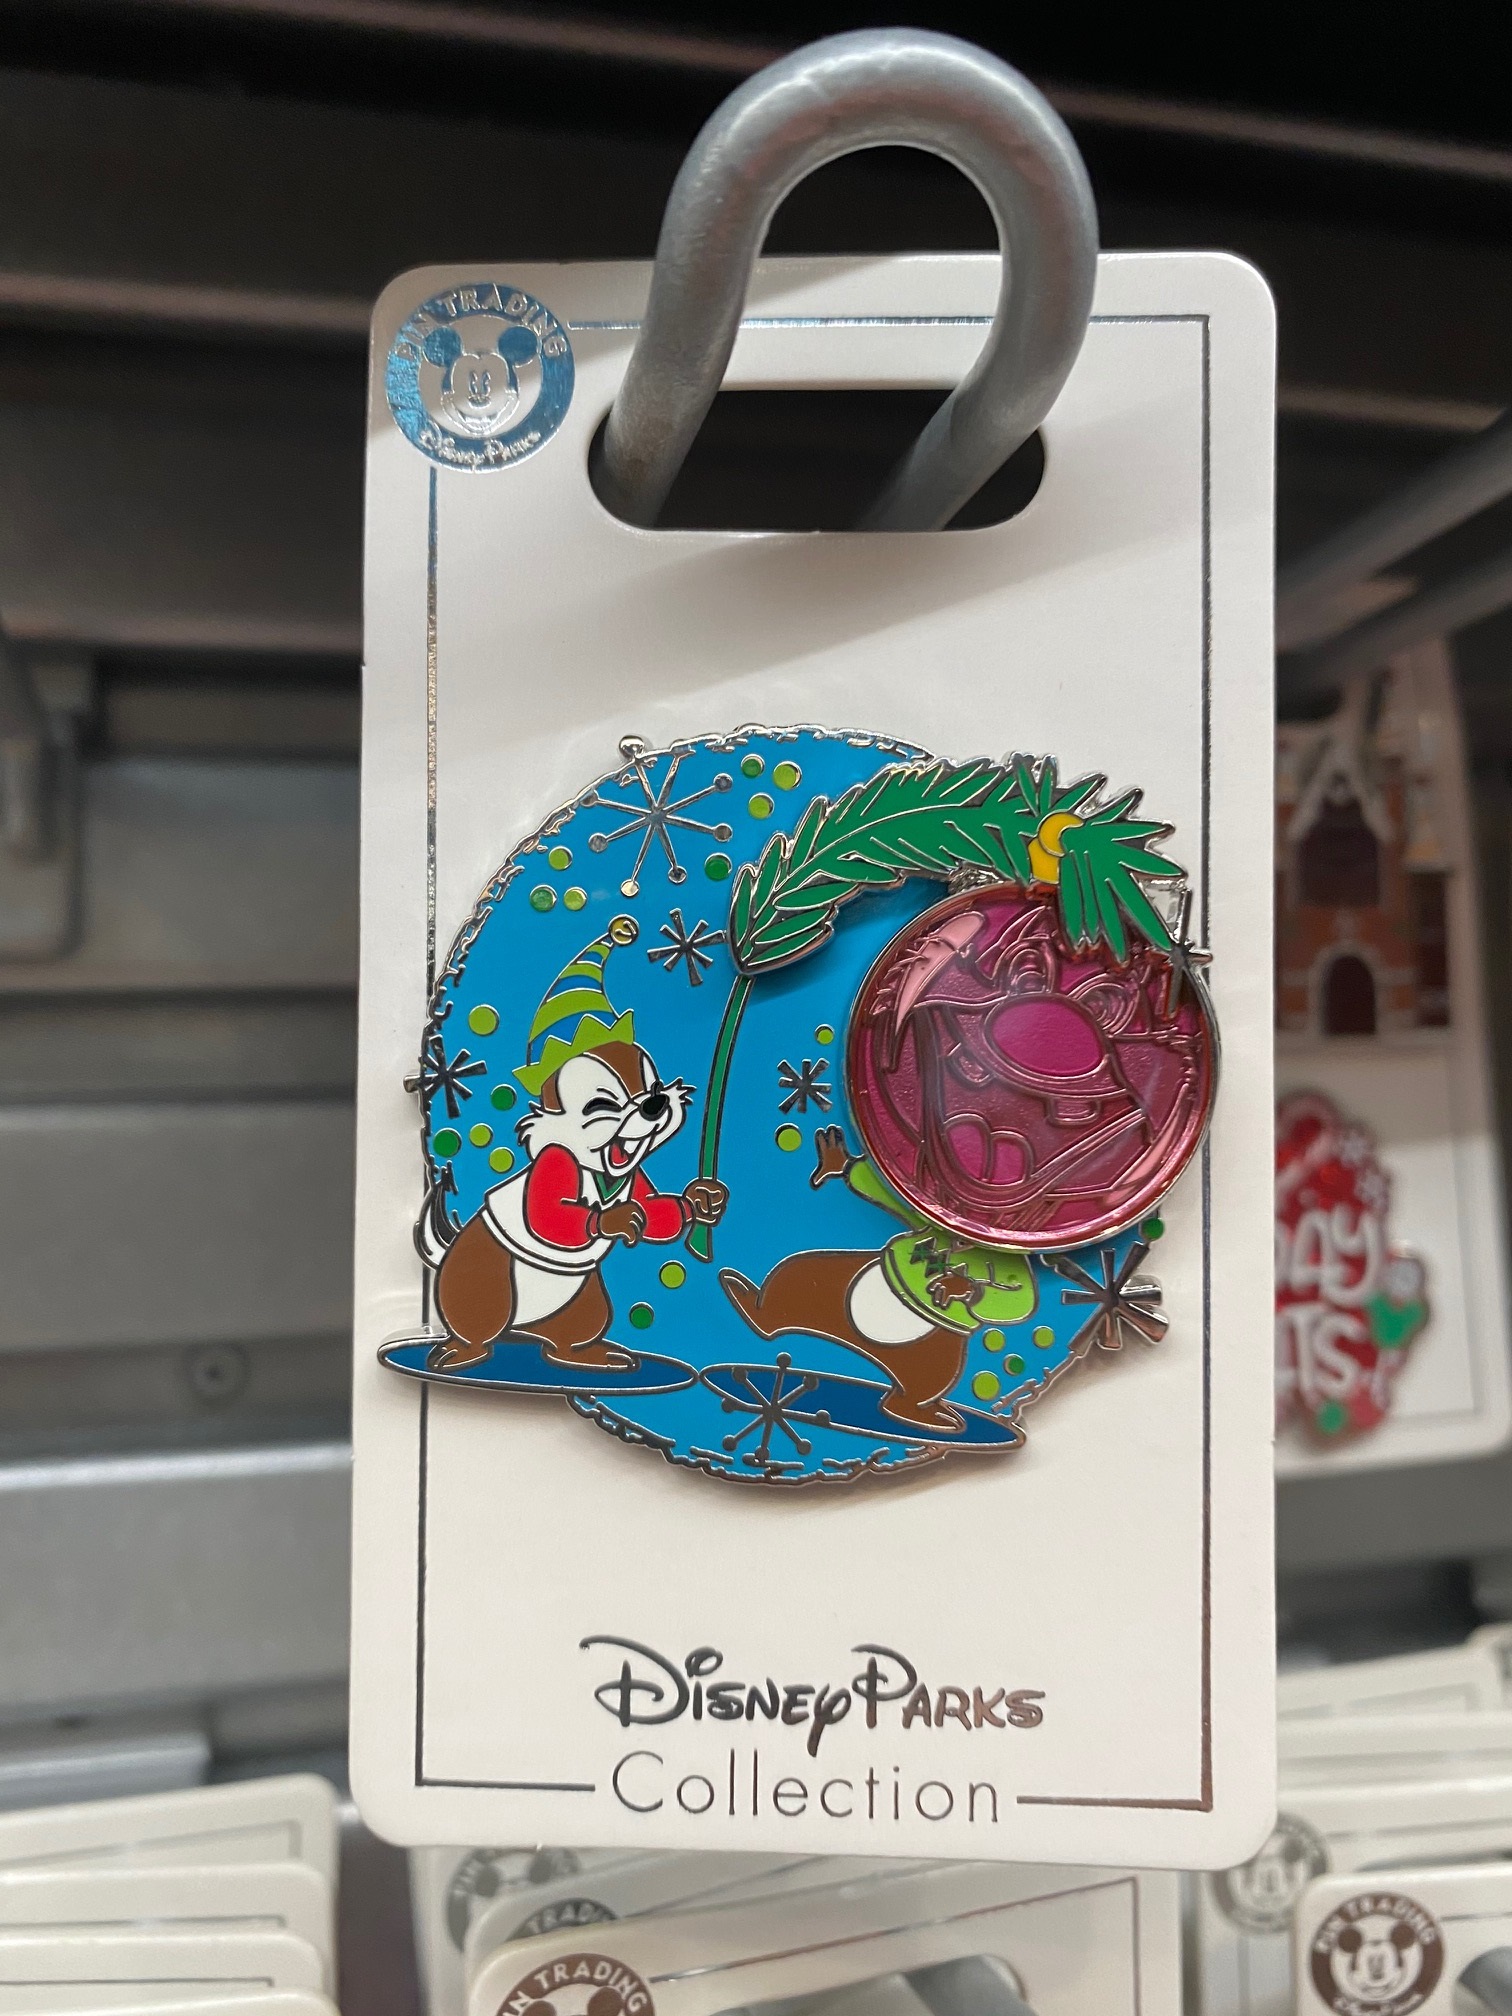 New Disney Holiday Pins Available at Walt Disney World - MickeyBlog.com